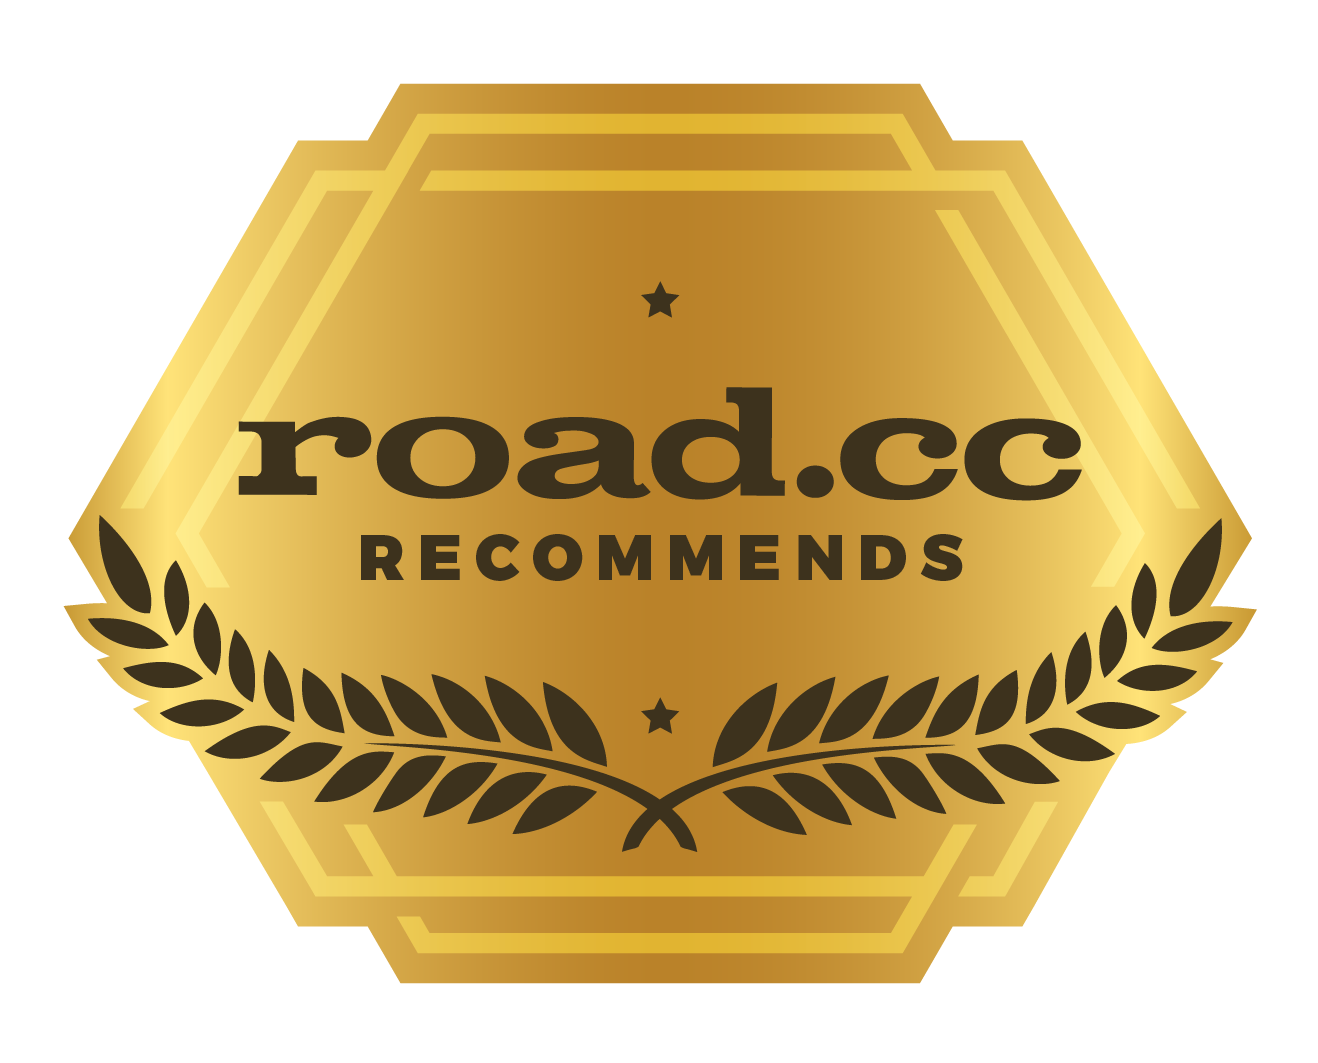 road.cc recommends award